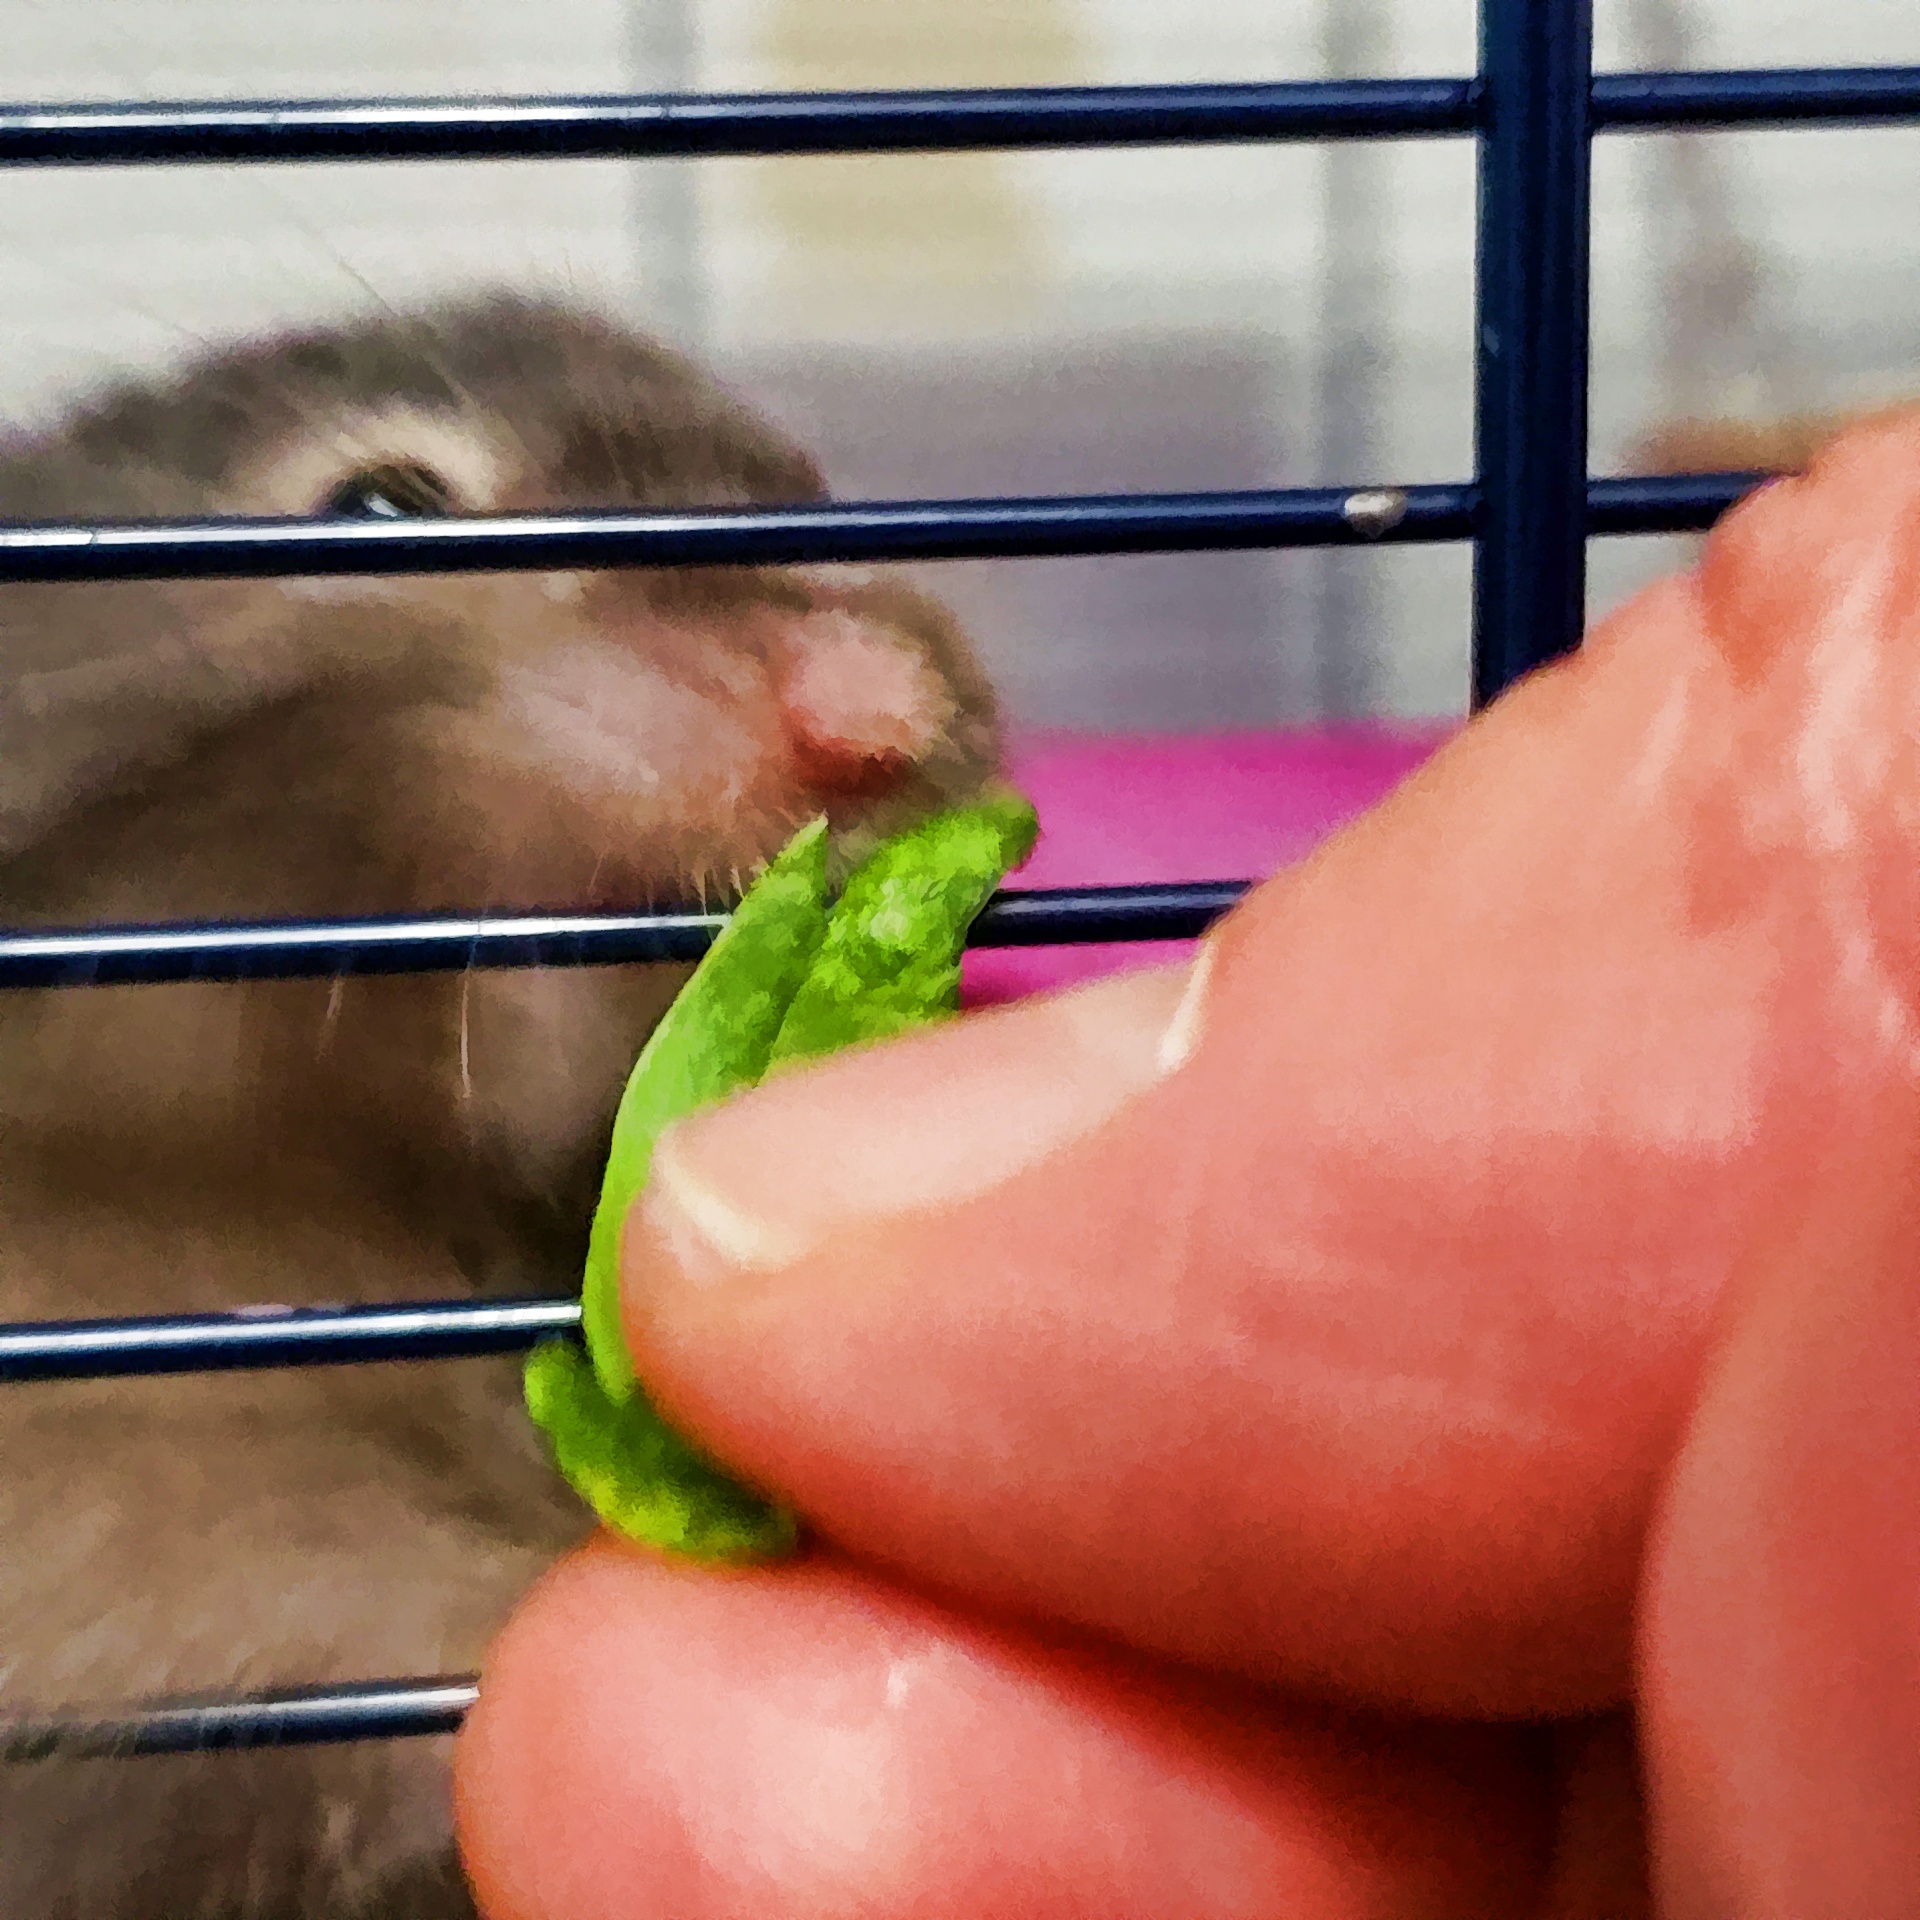 Feeding The Hamster